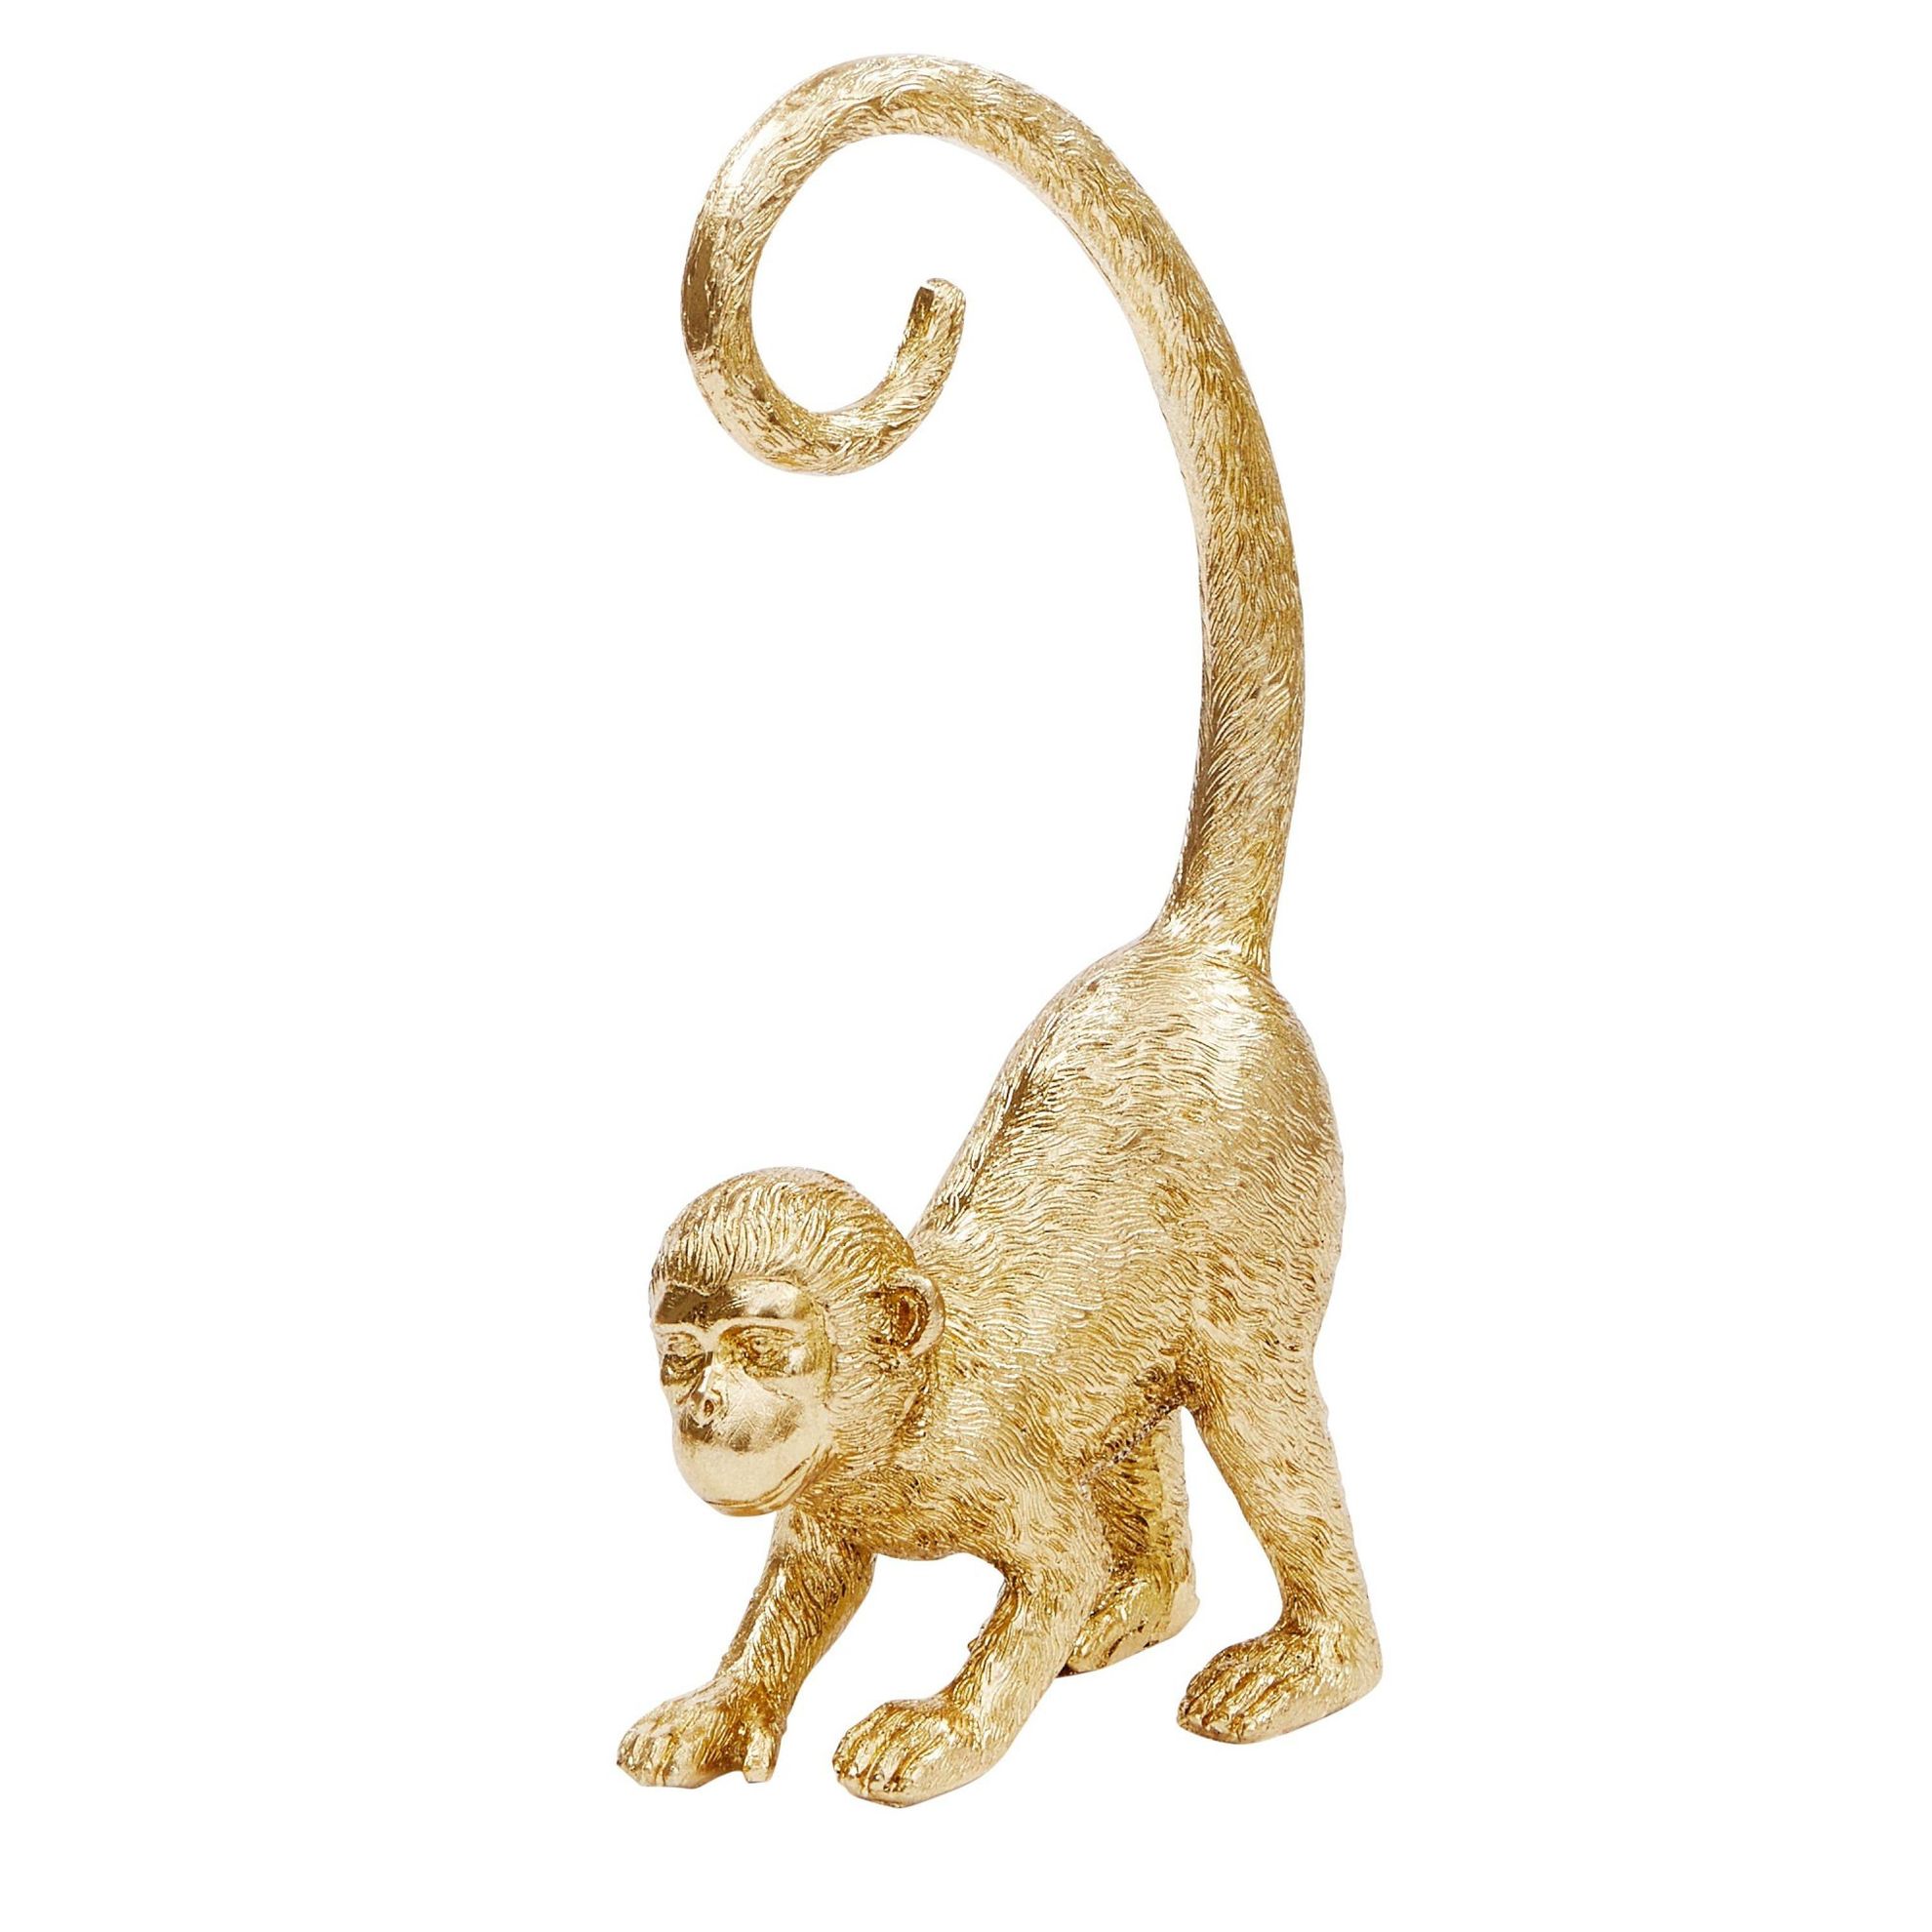 Deko-Figur Affe Goldfarben jetzt bei Weltbild.de bestellen